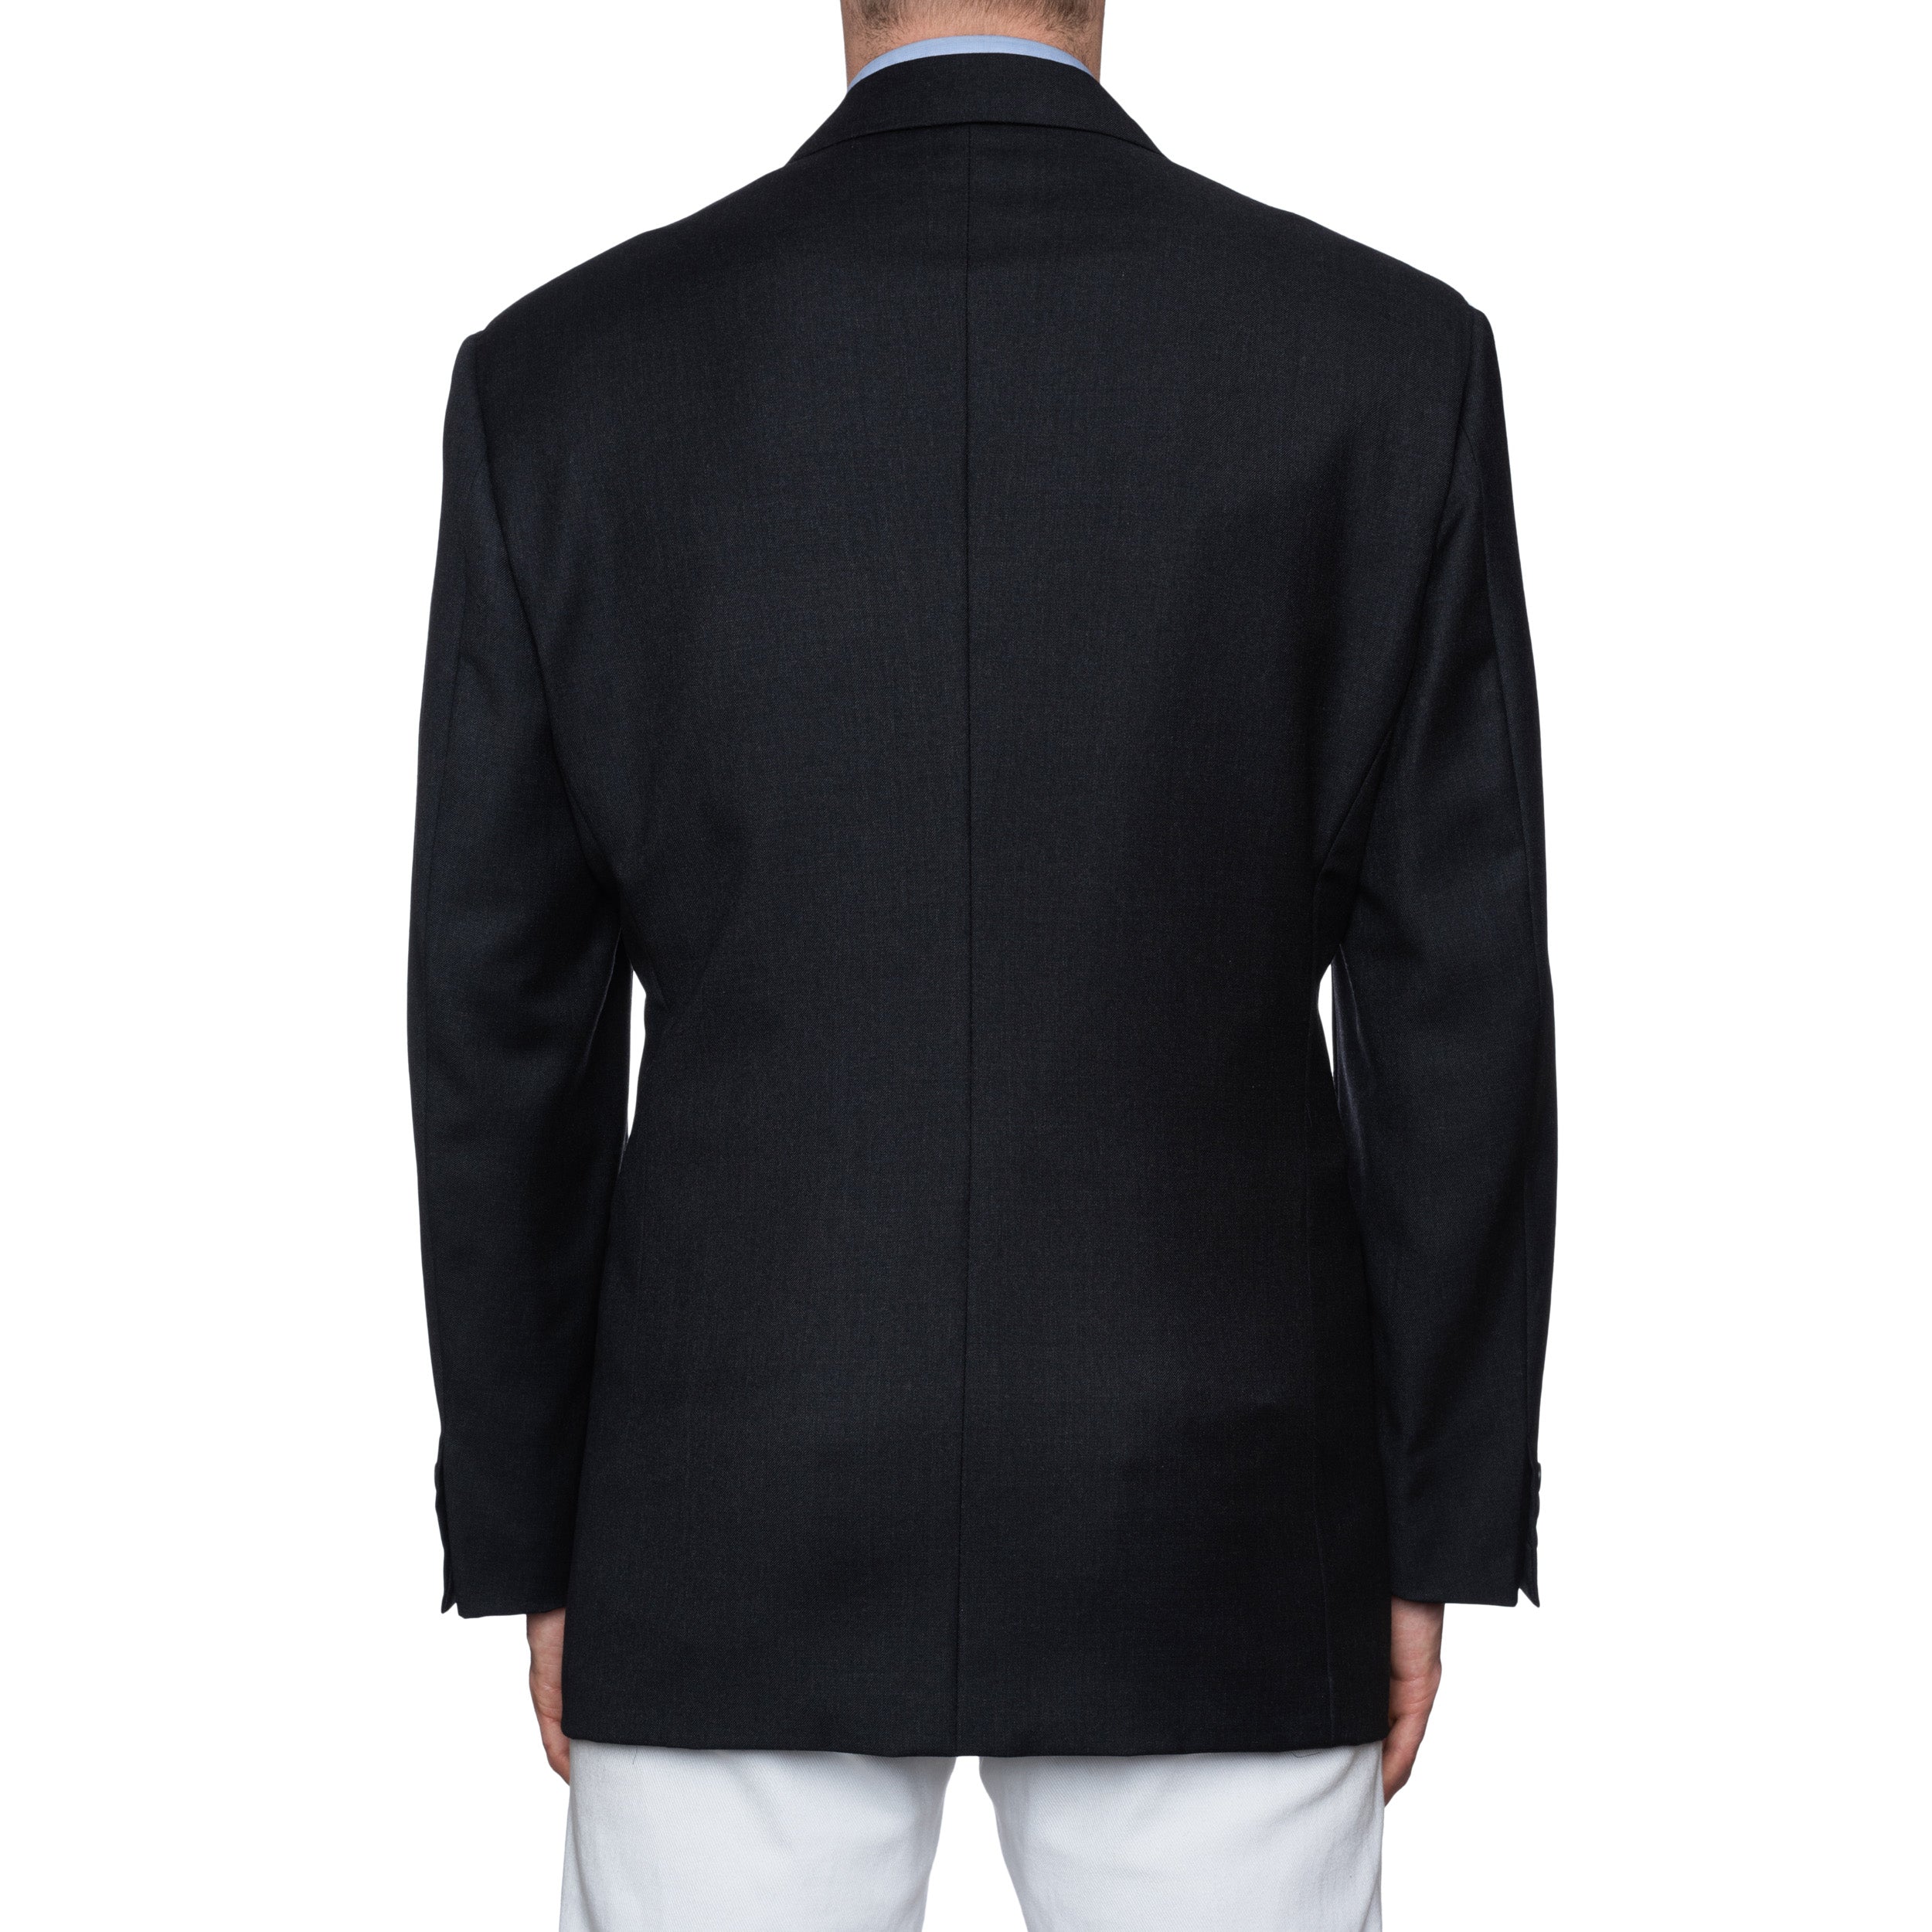 SARTORIA CASTANGIA Handmade Gray Wool Sport Coat Jacket EU 52 NEW US 42 CASTANGIA